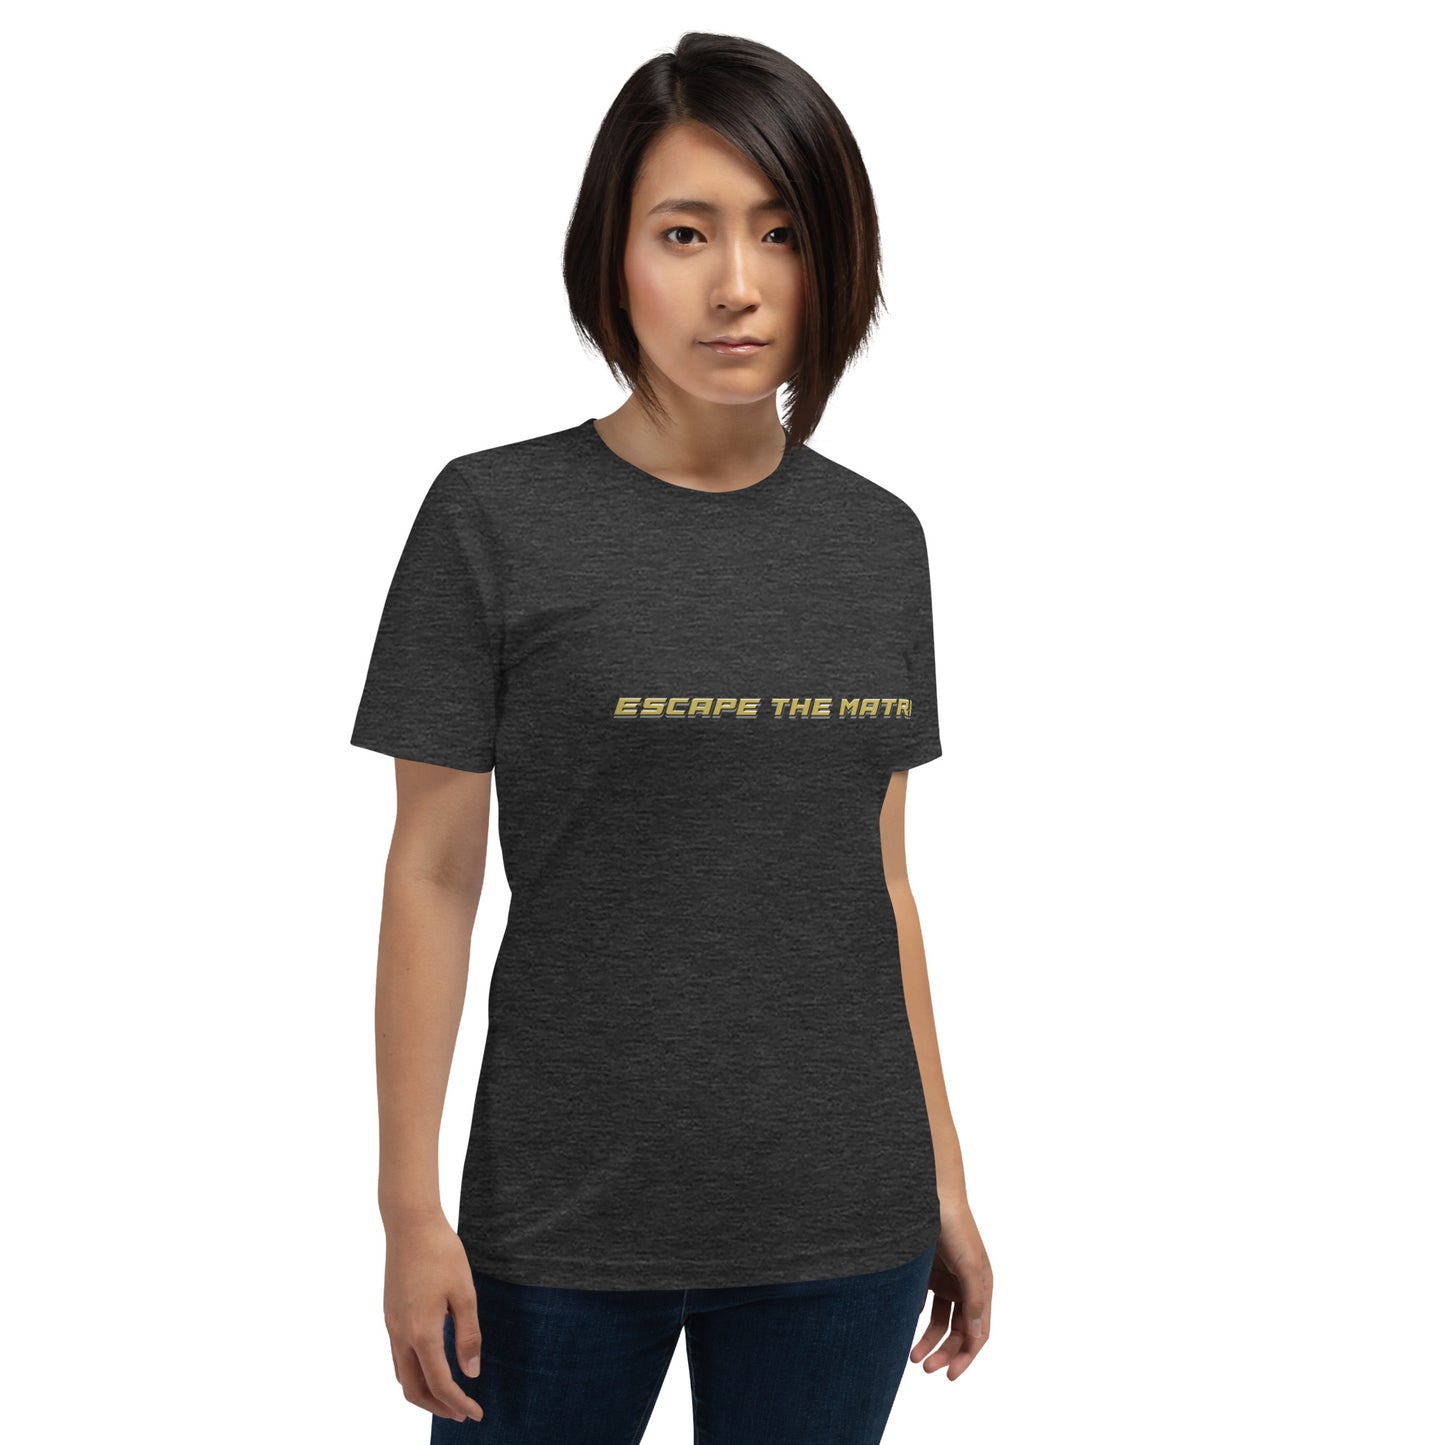 Snooty Fox Art Unisex T-shirt - Escape the Matrix